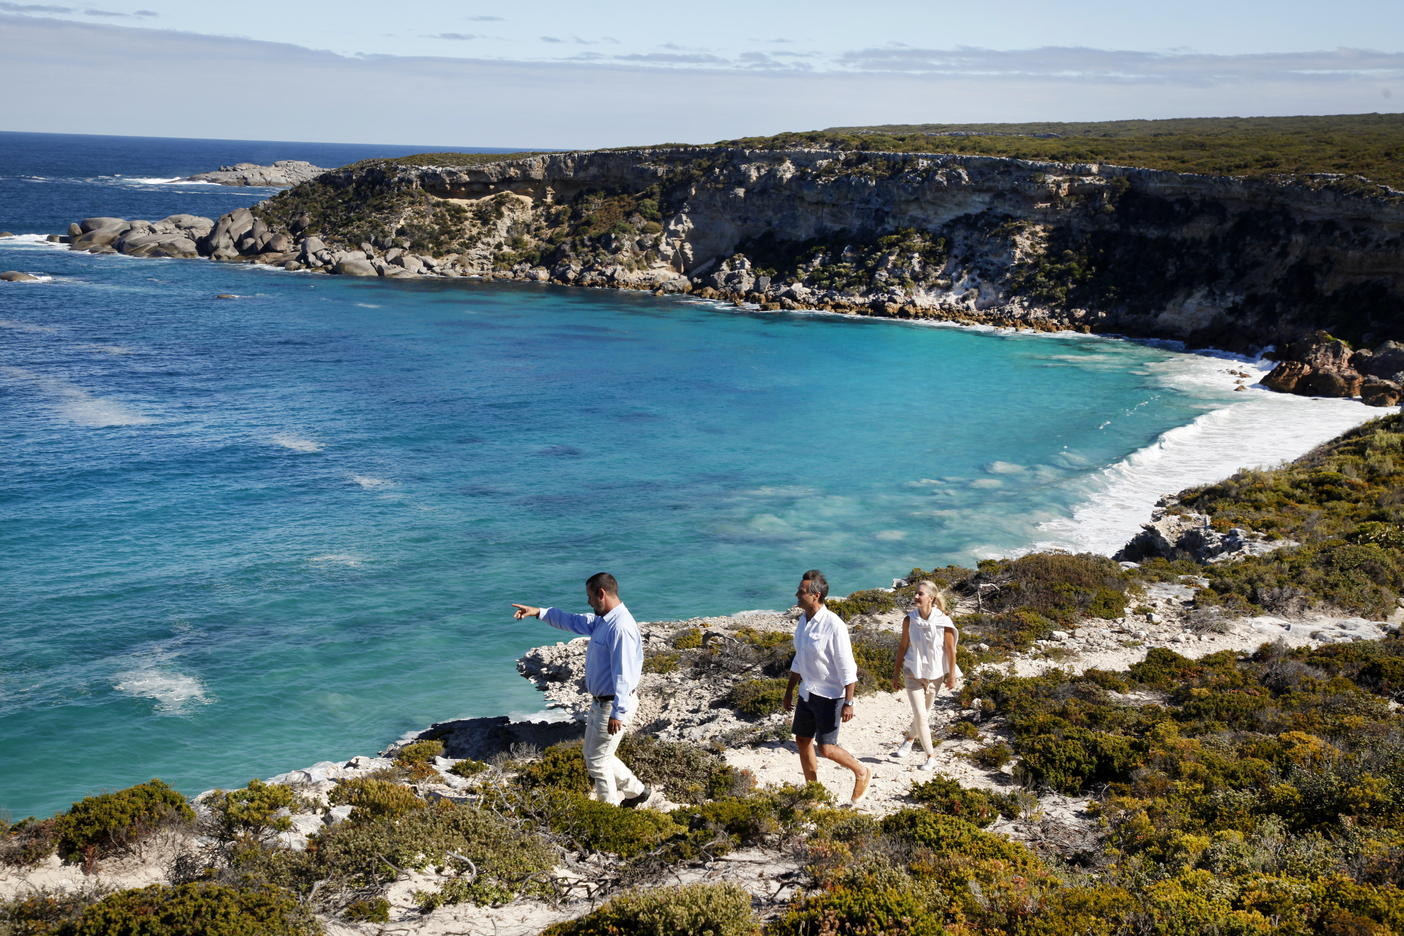 Southern Ocean Lodge 的海岸懸崖步道健行活動，帶著遊客探索袋鼠島海岸自然生態景觀。